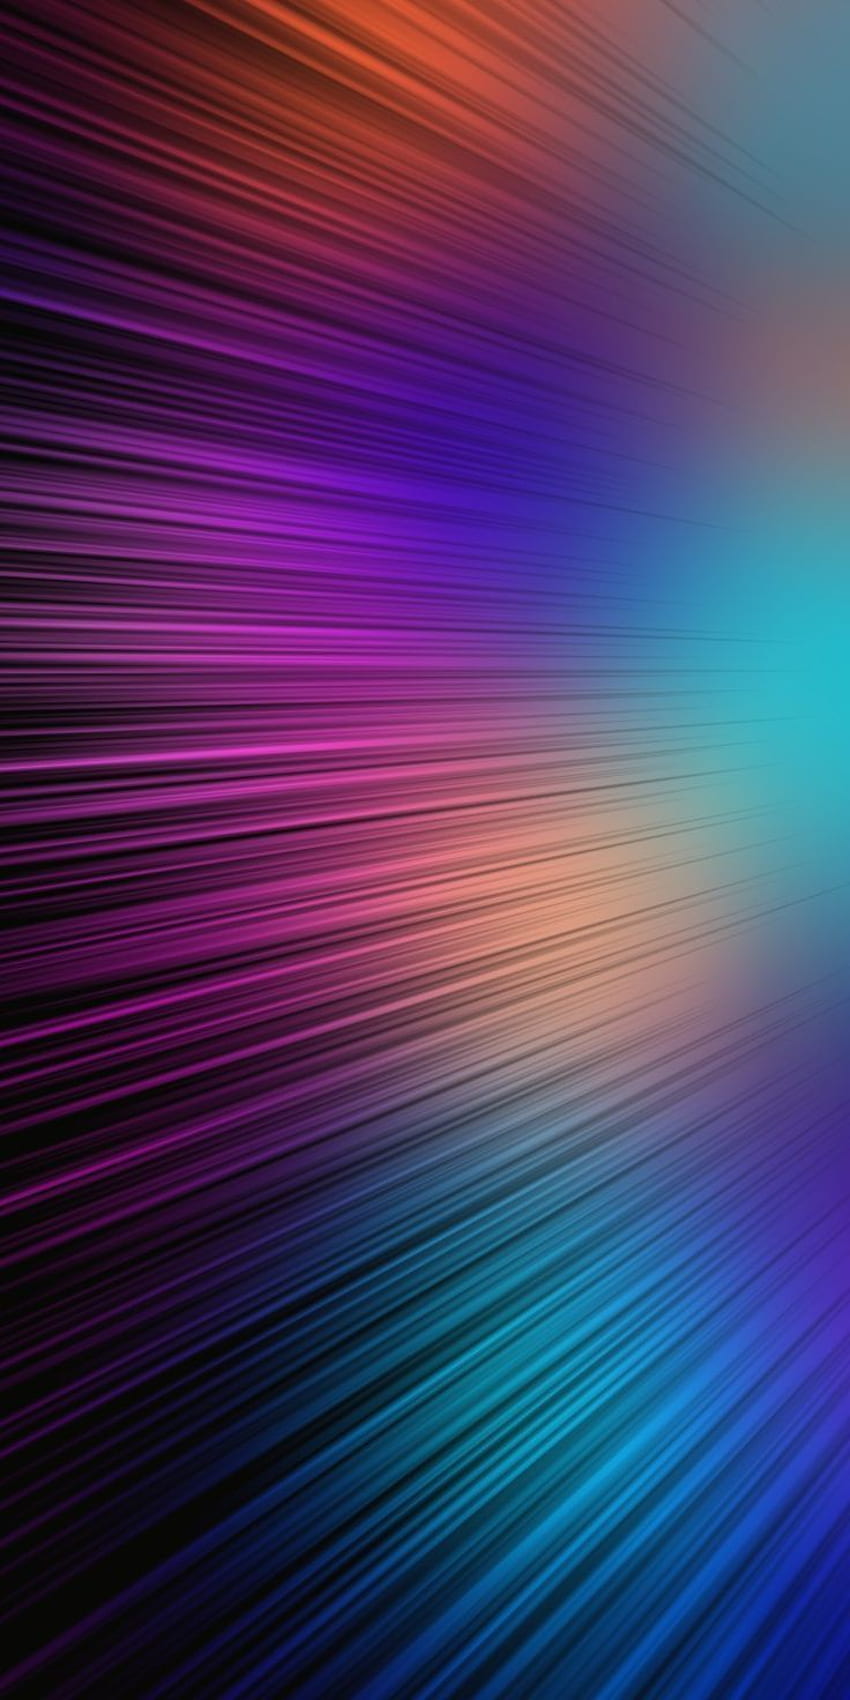 Gaming PinWire: Iyan Sofyan on Abstract Amoled Liquid Gradient - Pinterest 7. Original iphone , Abstract background y Colorful fondo de pantalla del teléfono